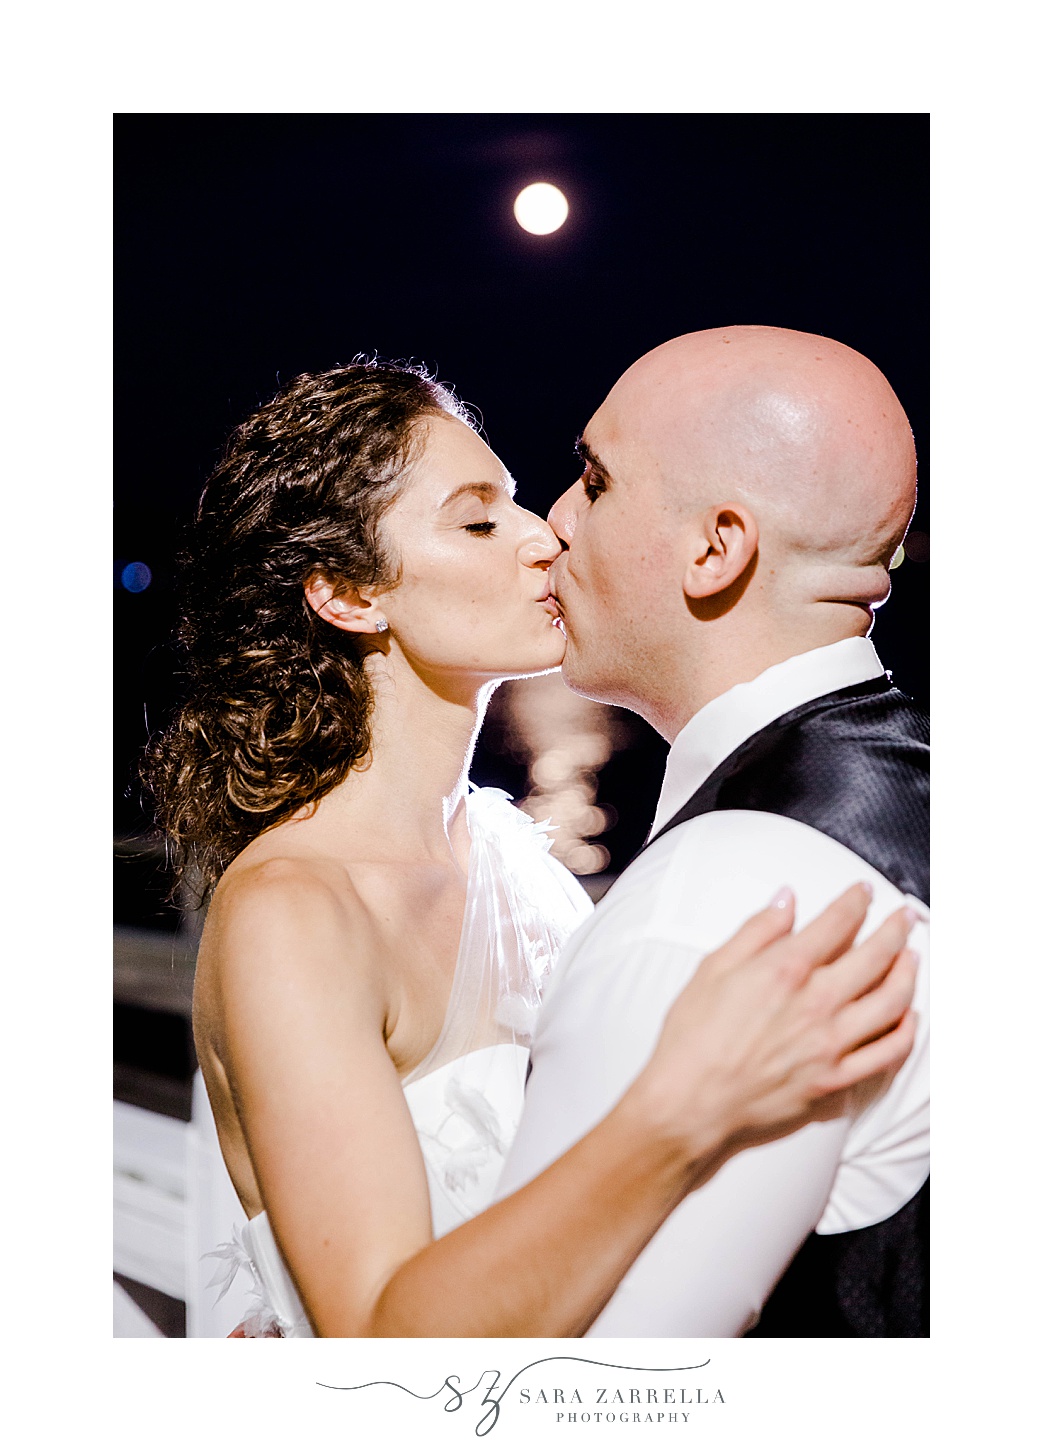 newlyweds kiss during nighttime wedding portraits in Newport RI